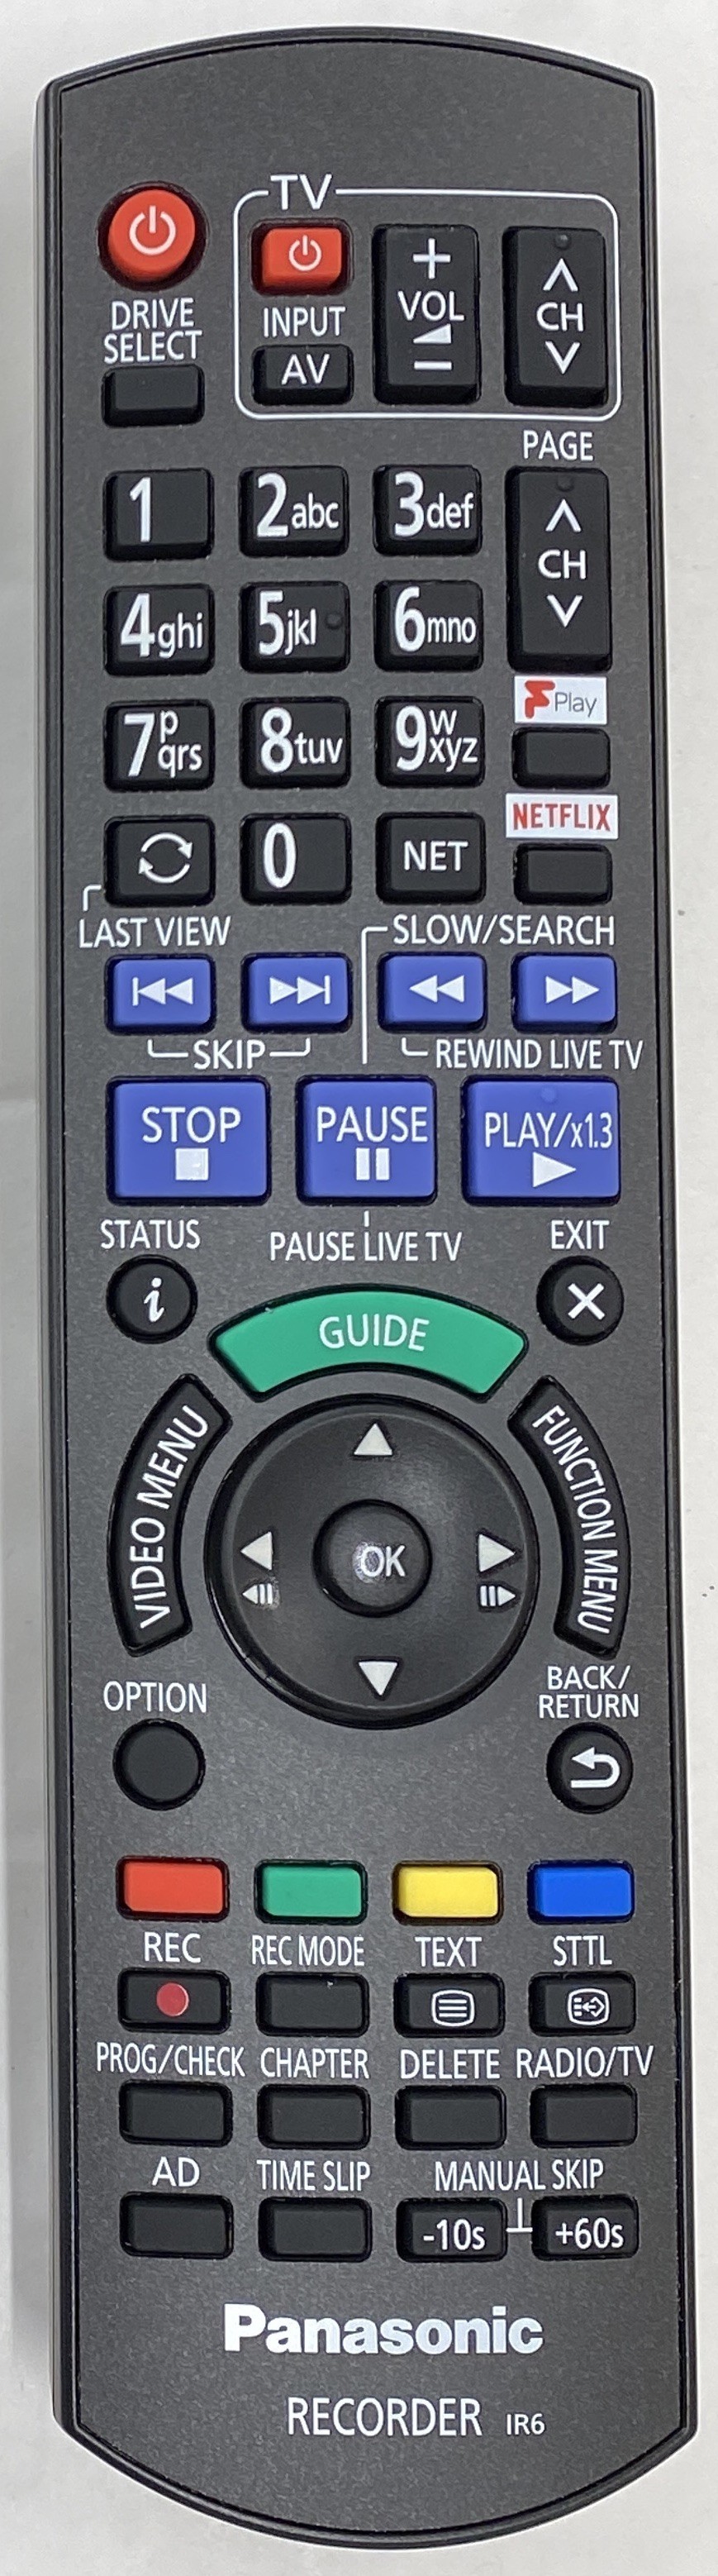 PANASONIC DMR-HWT150 Remote Control Original